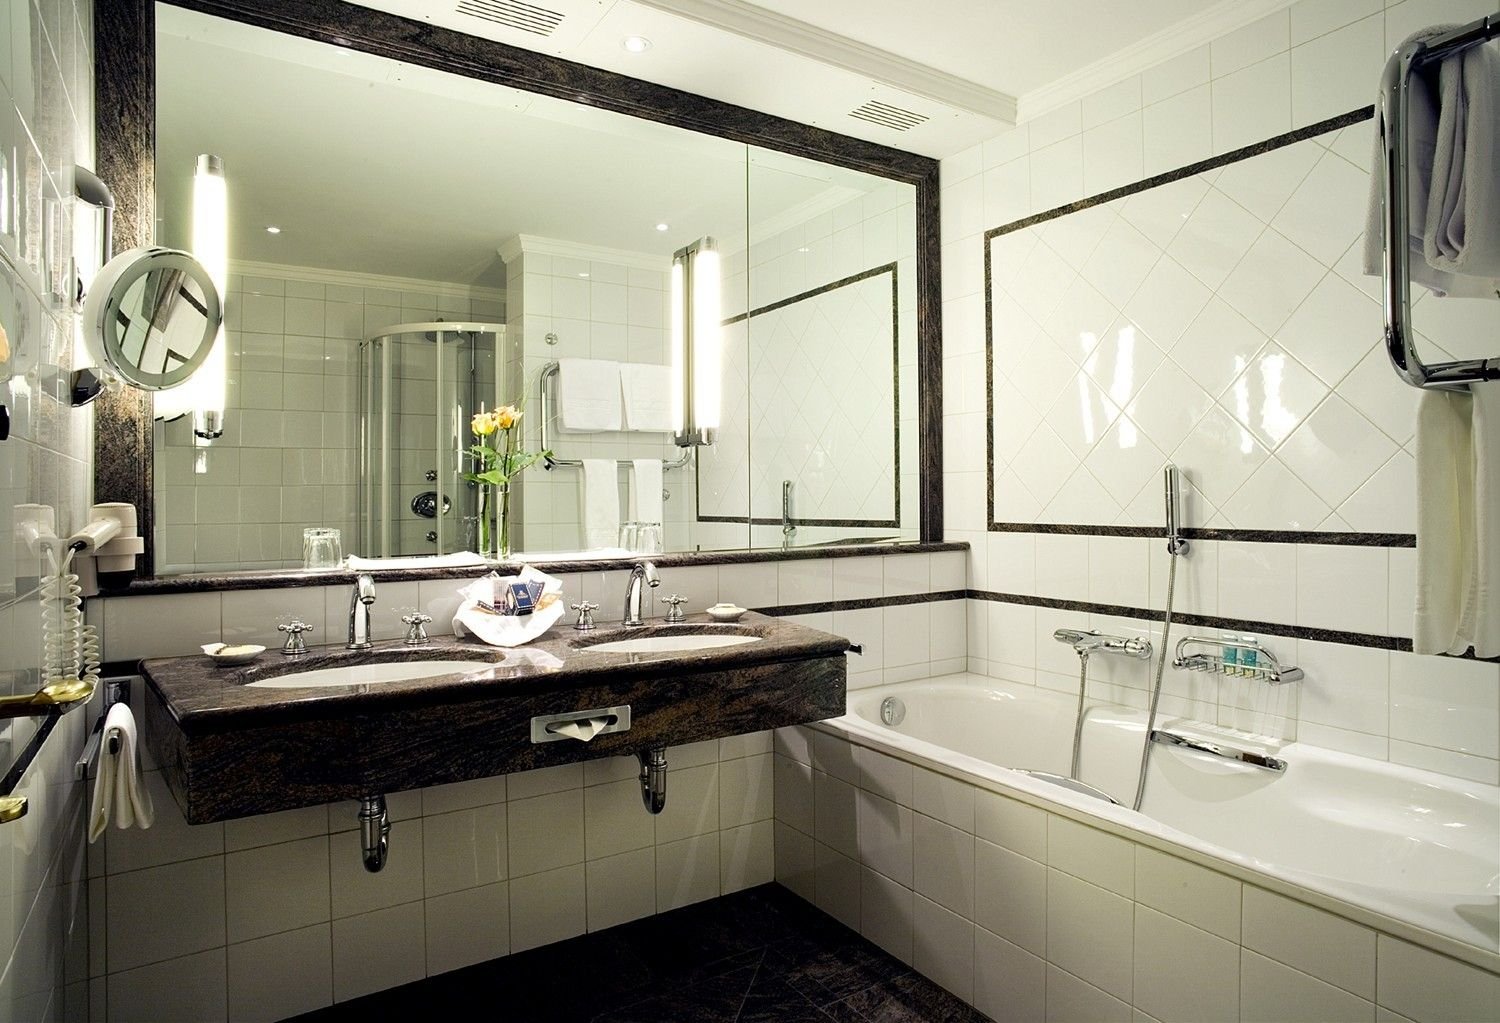 Modern bathroom tiles guarantee a bathroom design that combines aesthetics